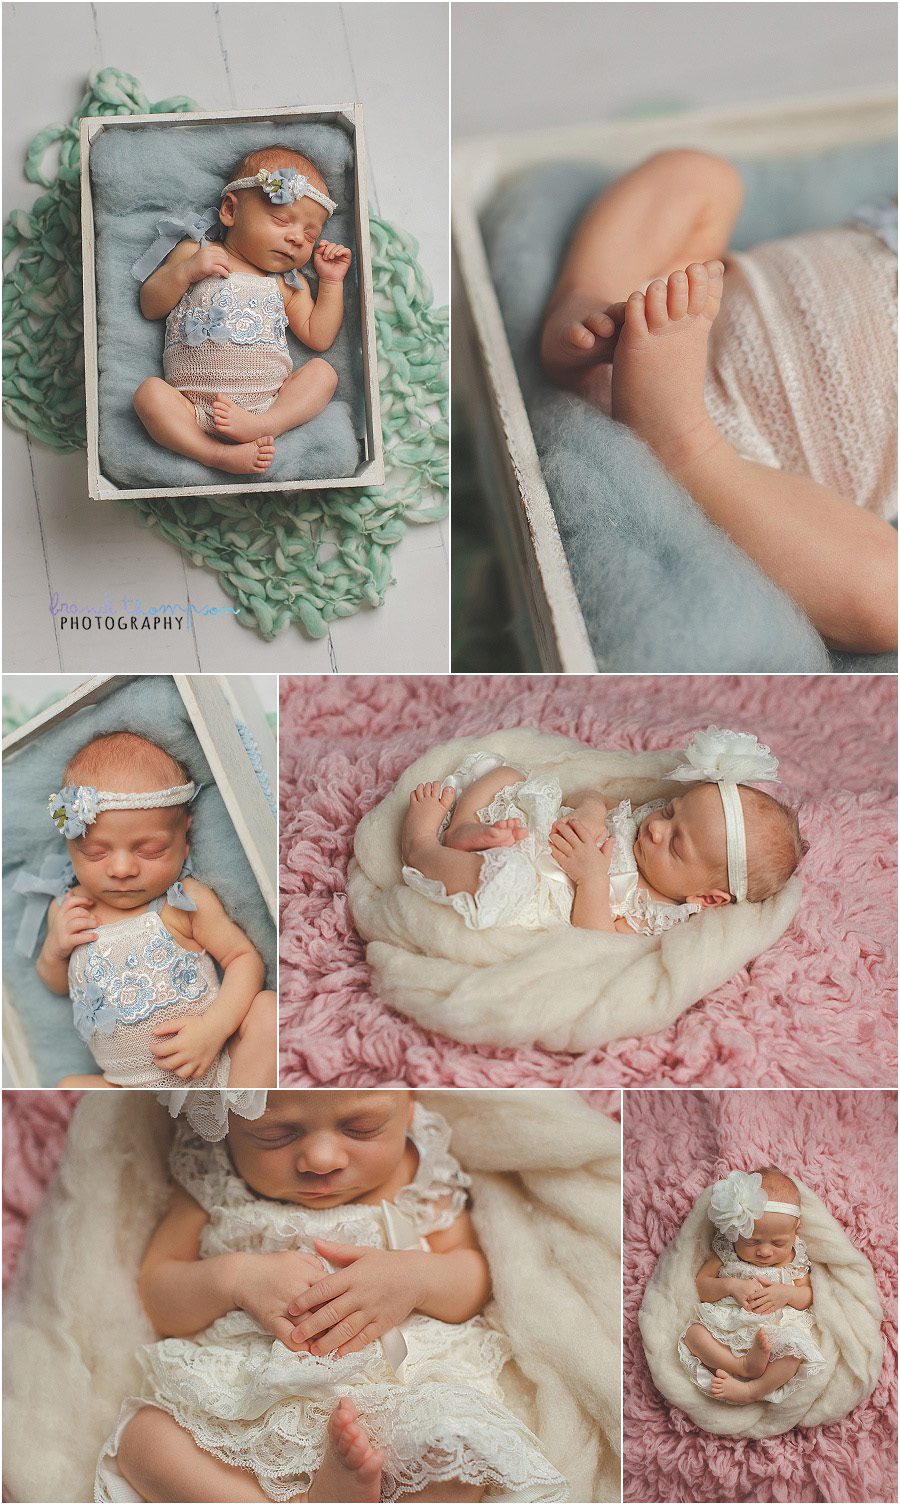 Plano studio newborn photography, newborn with props